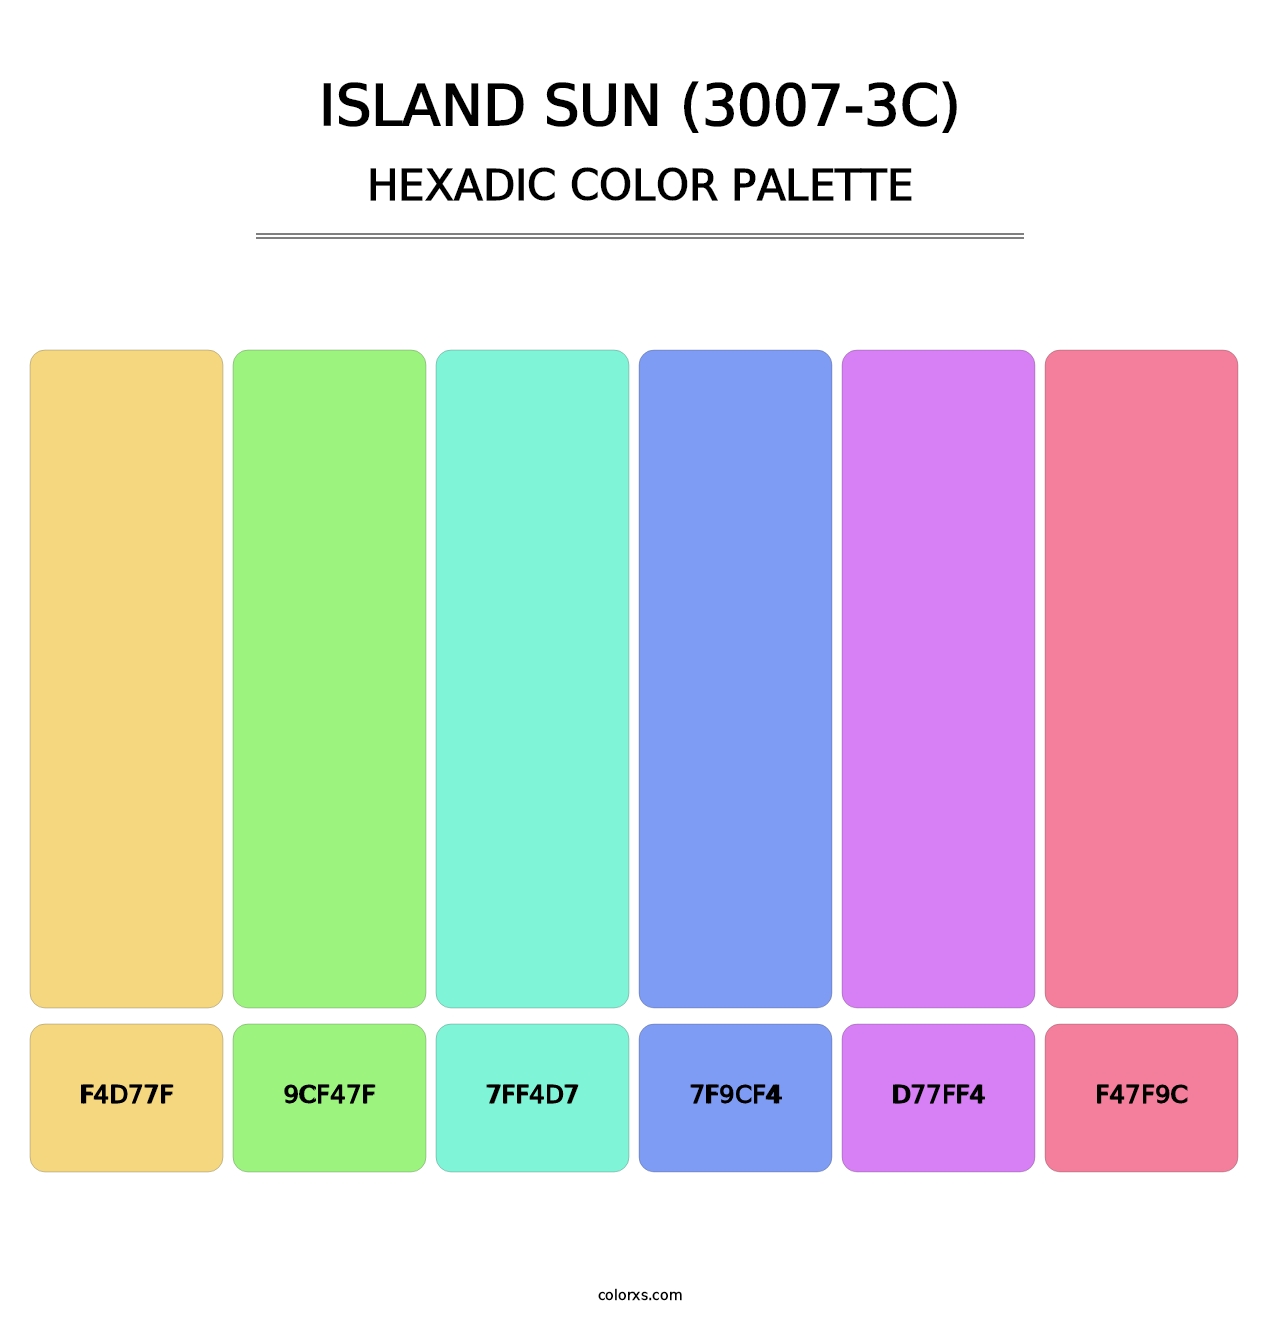 Island Sun (3007-3C) - Hexadic Color Palette